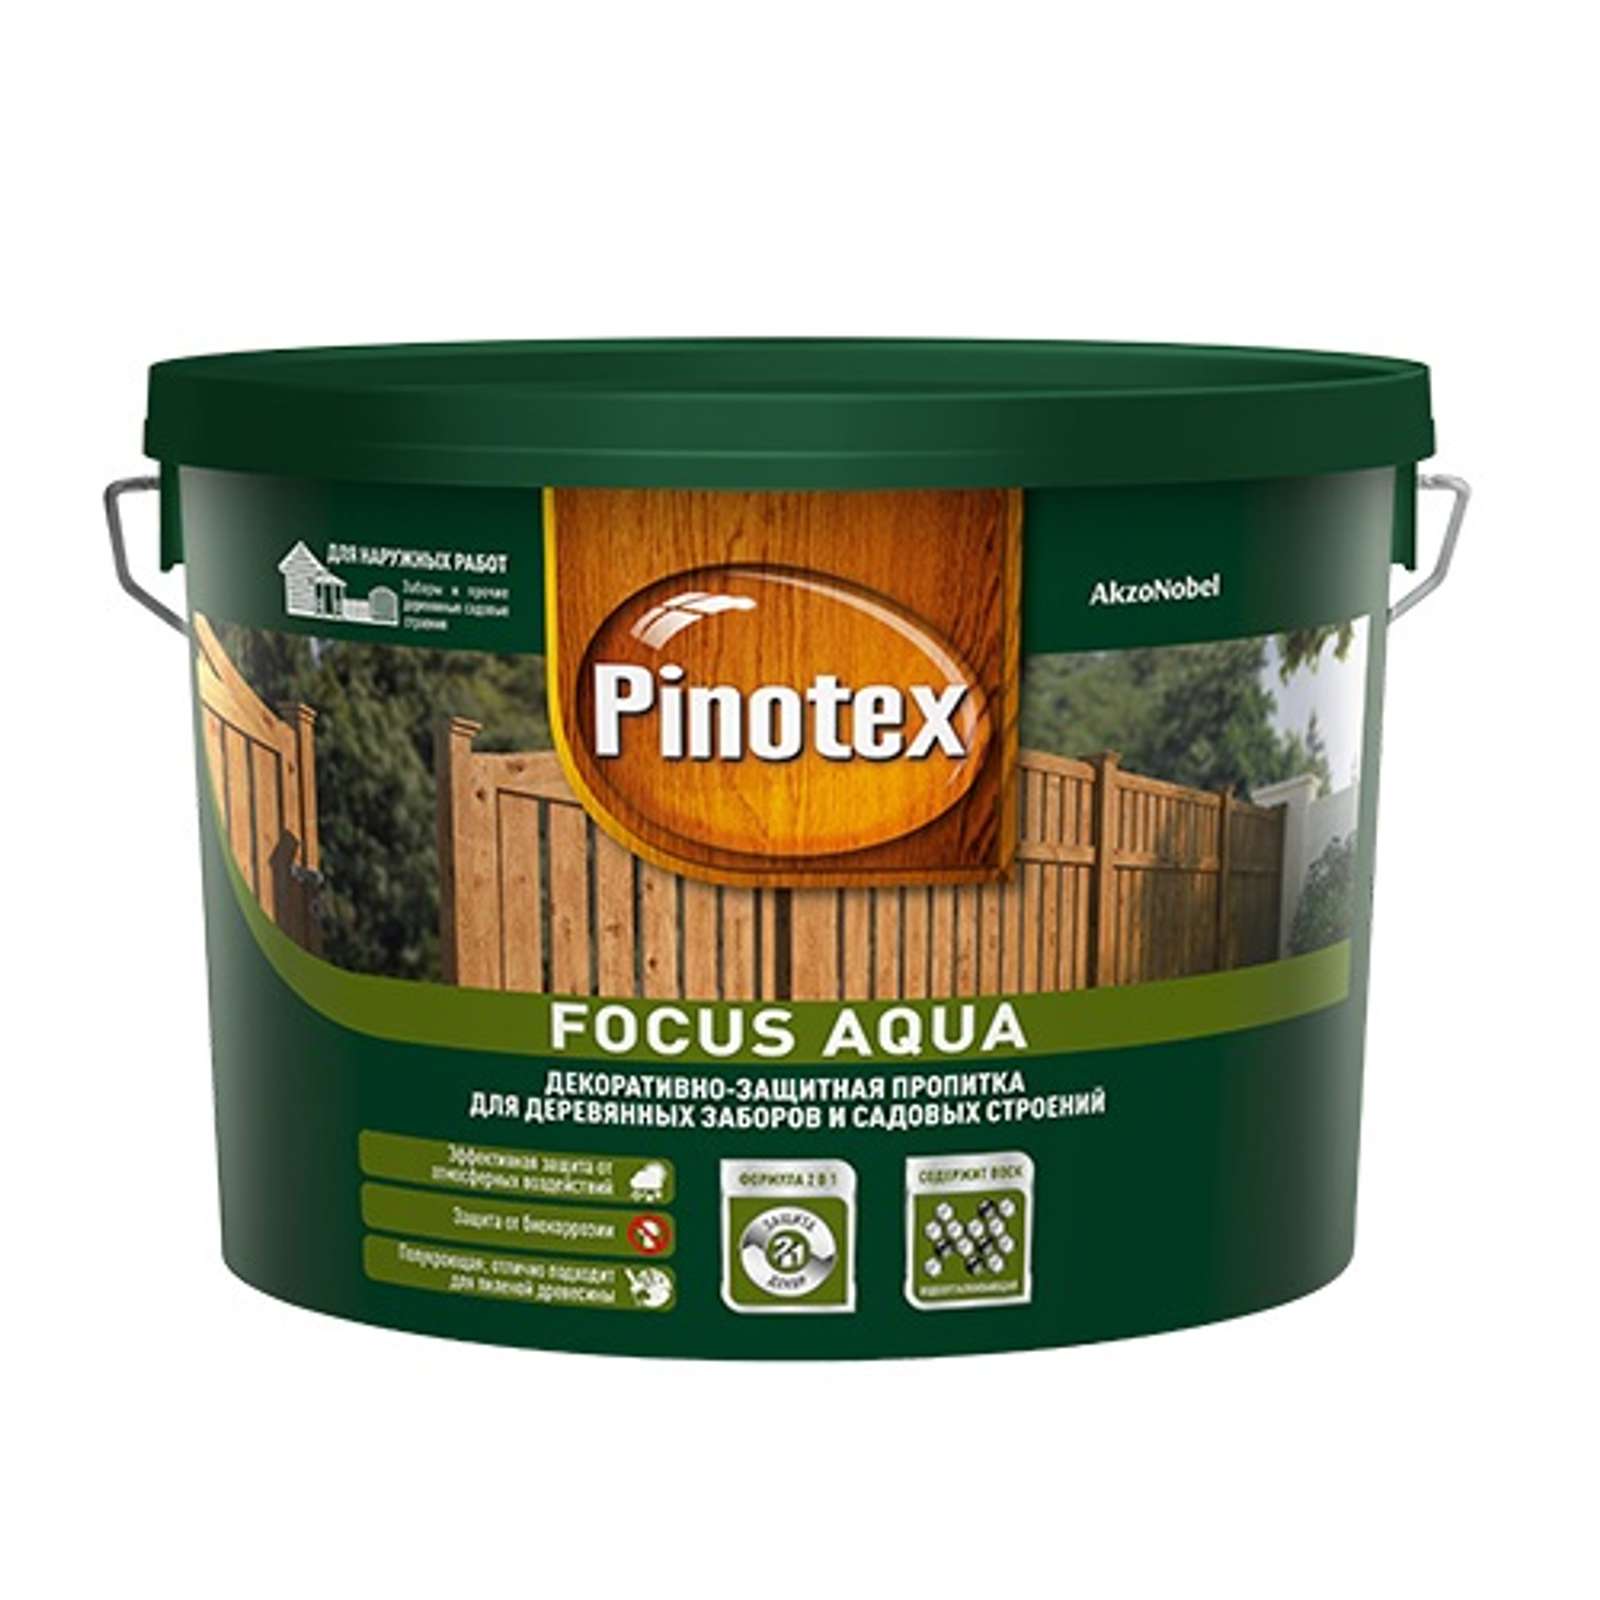 Pinotex Focus, орех, 5 л